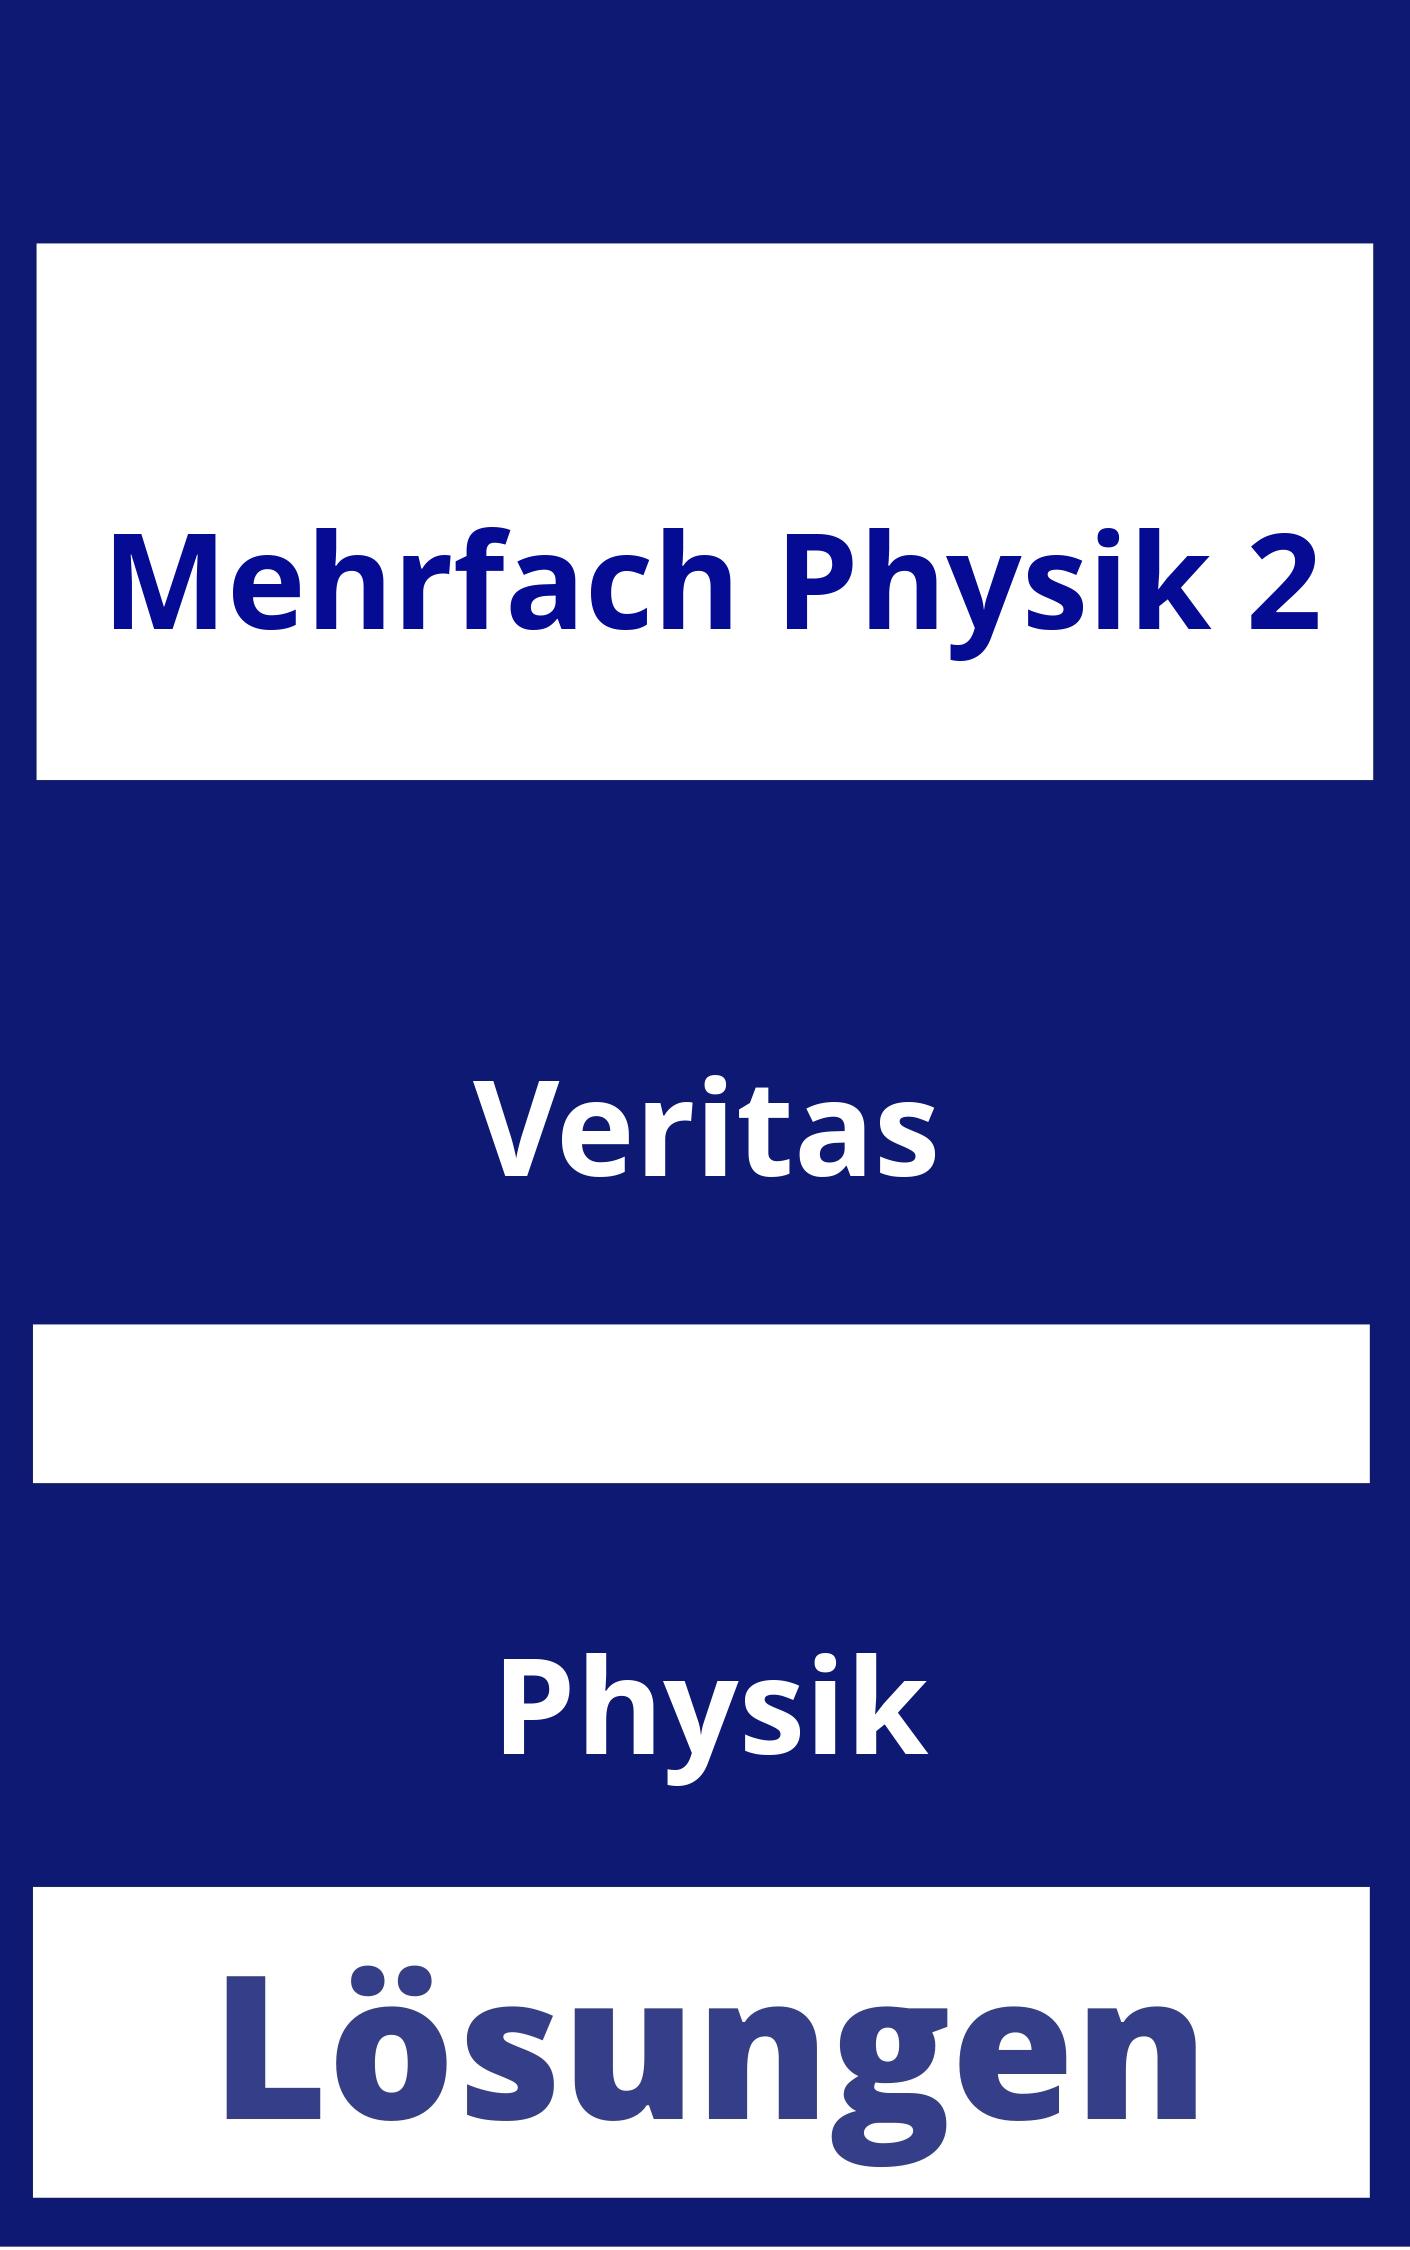 MEHRfach Physik 2